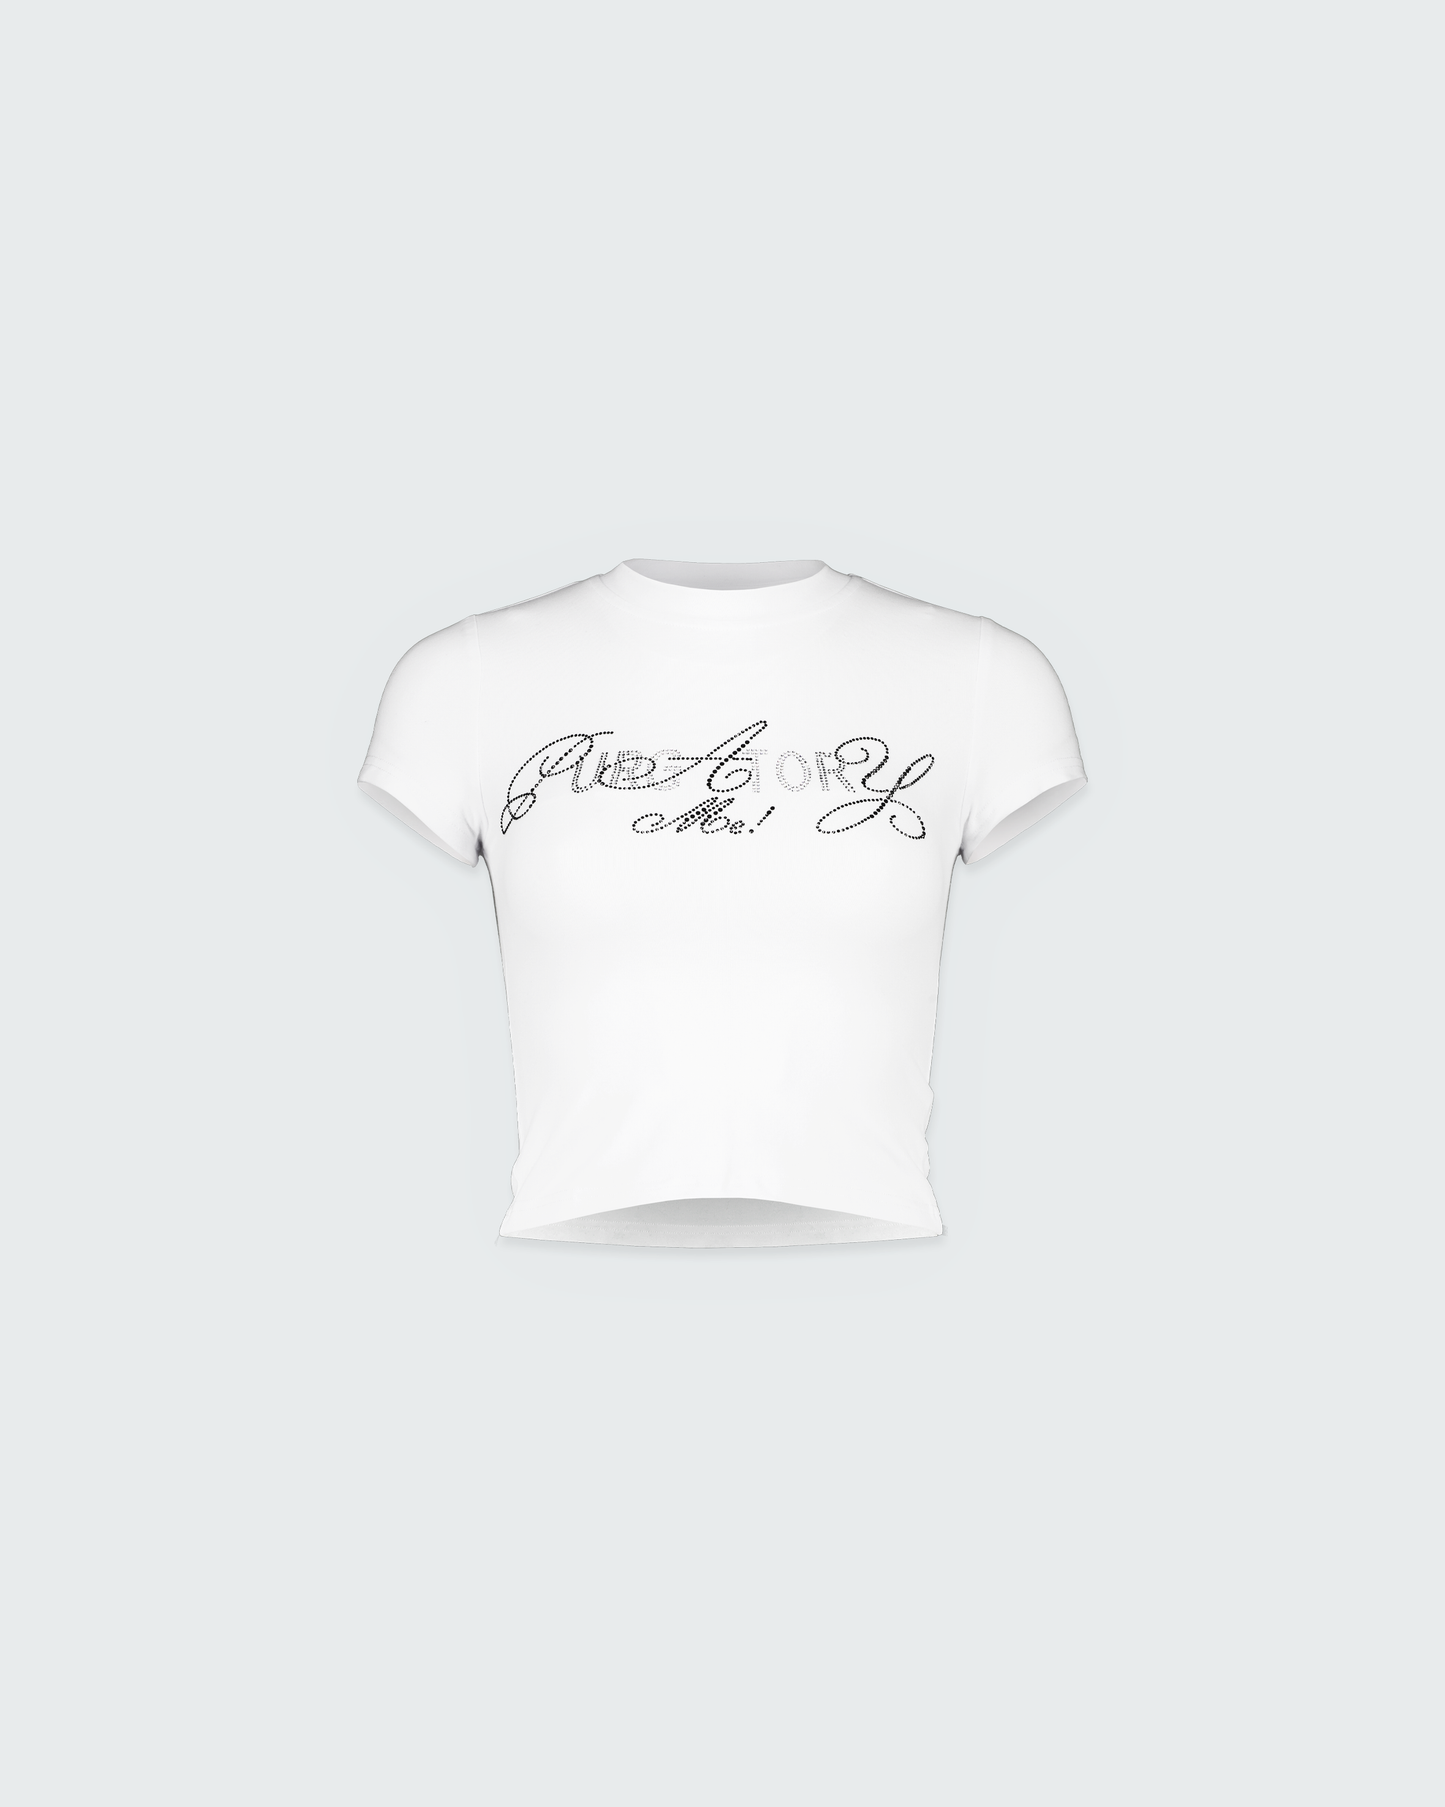 „PURGATORY ME“ Baby-T-Shirt (B)